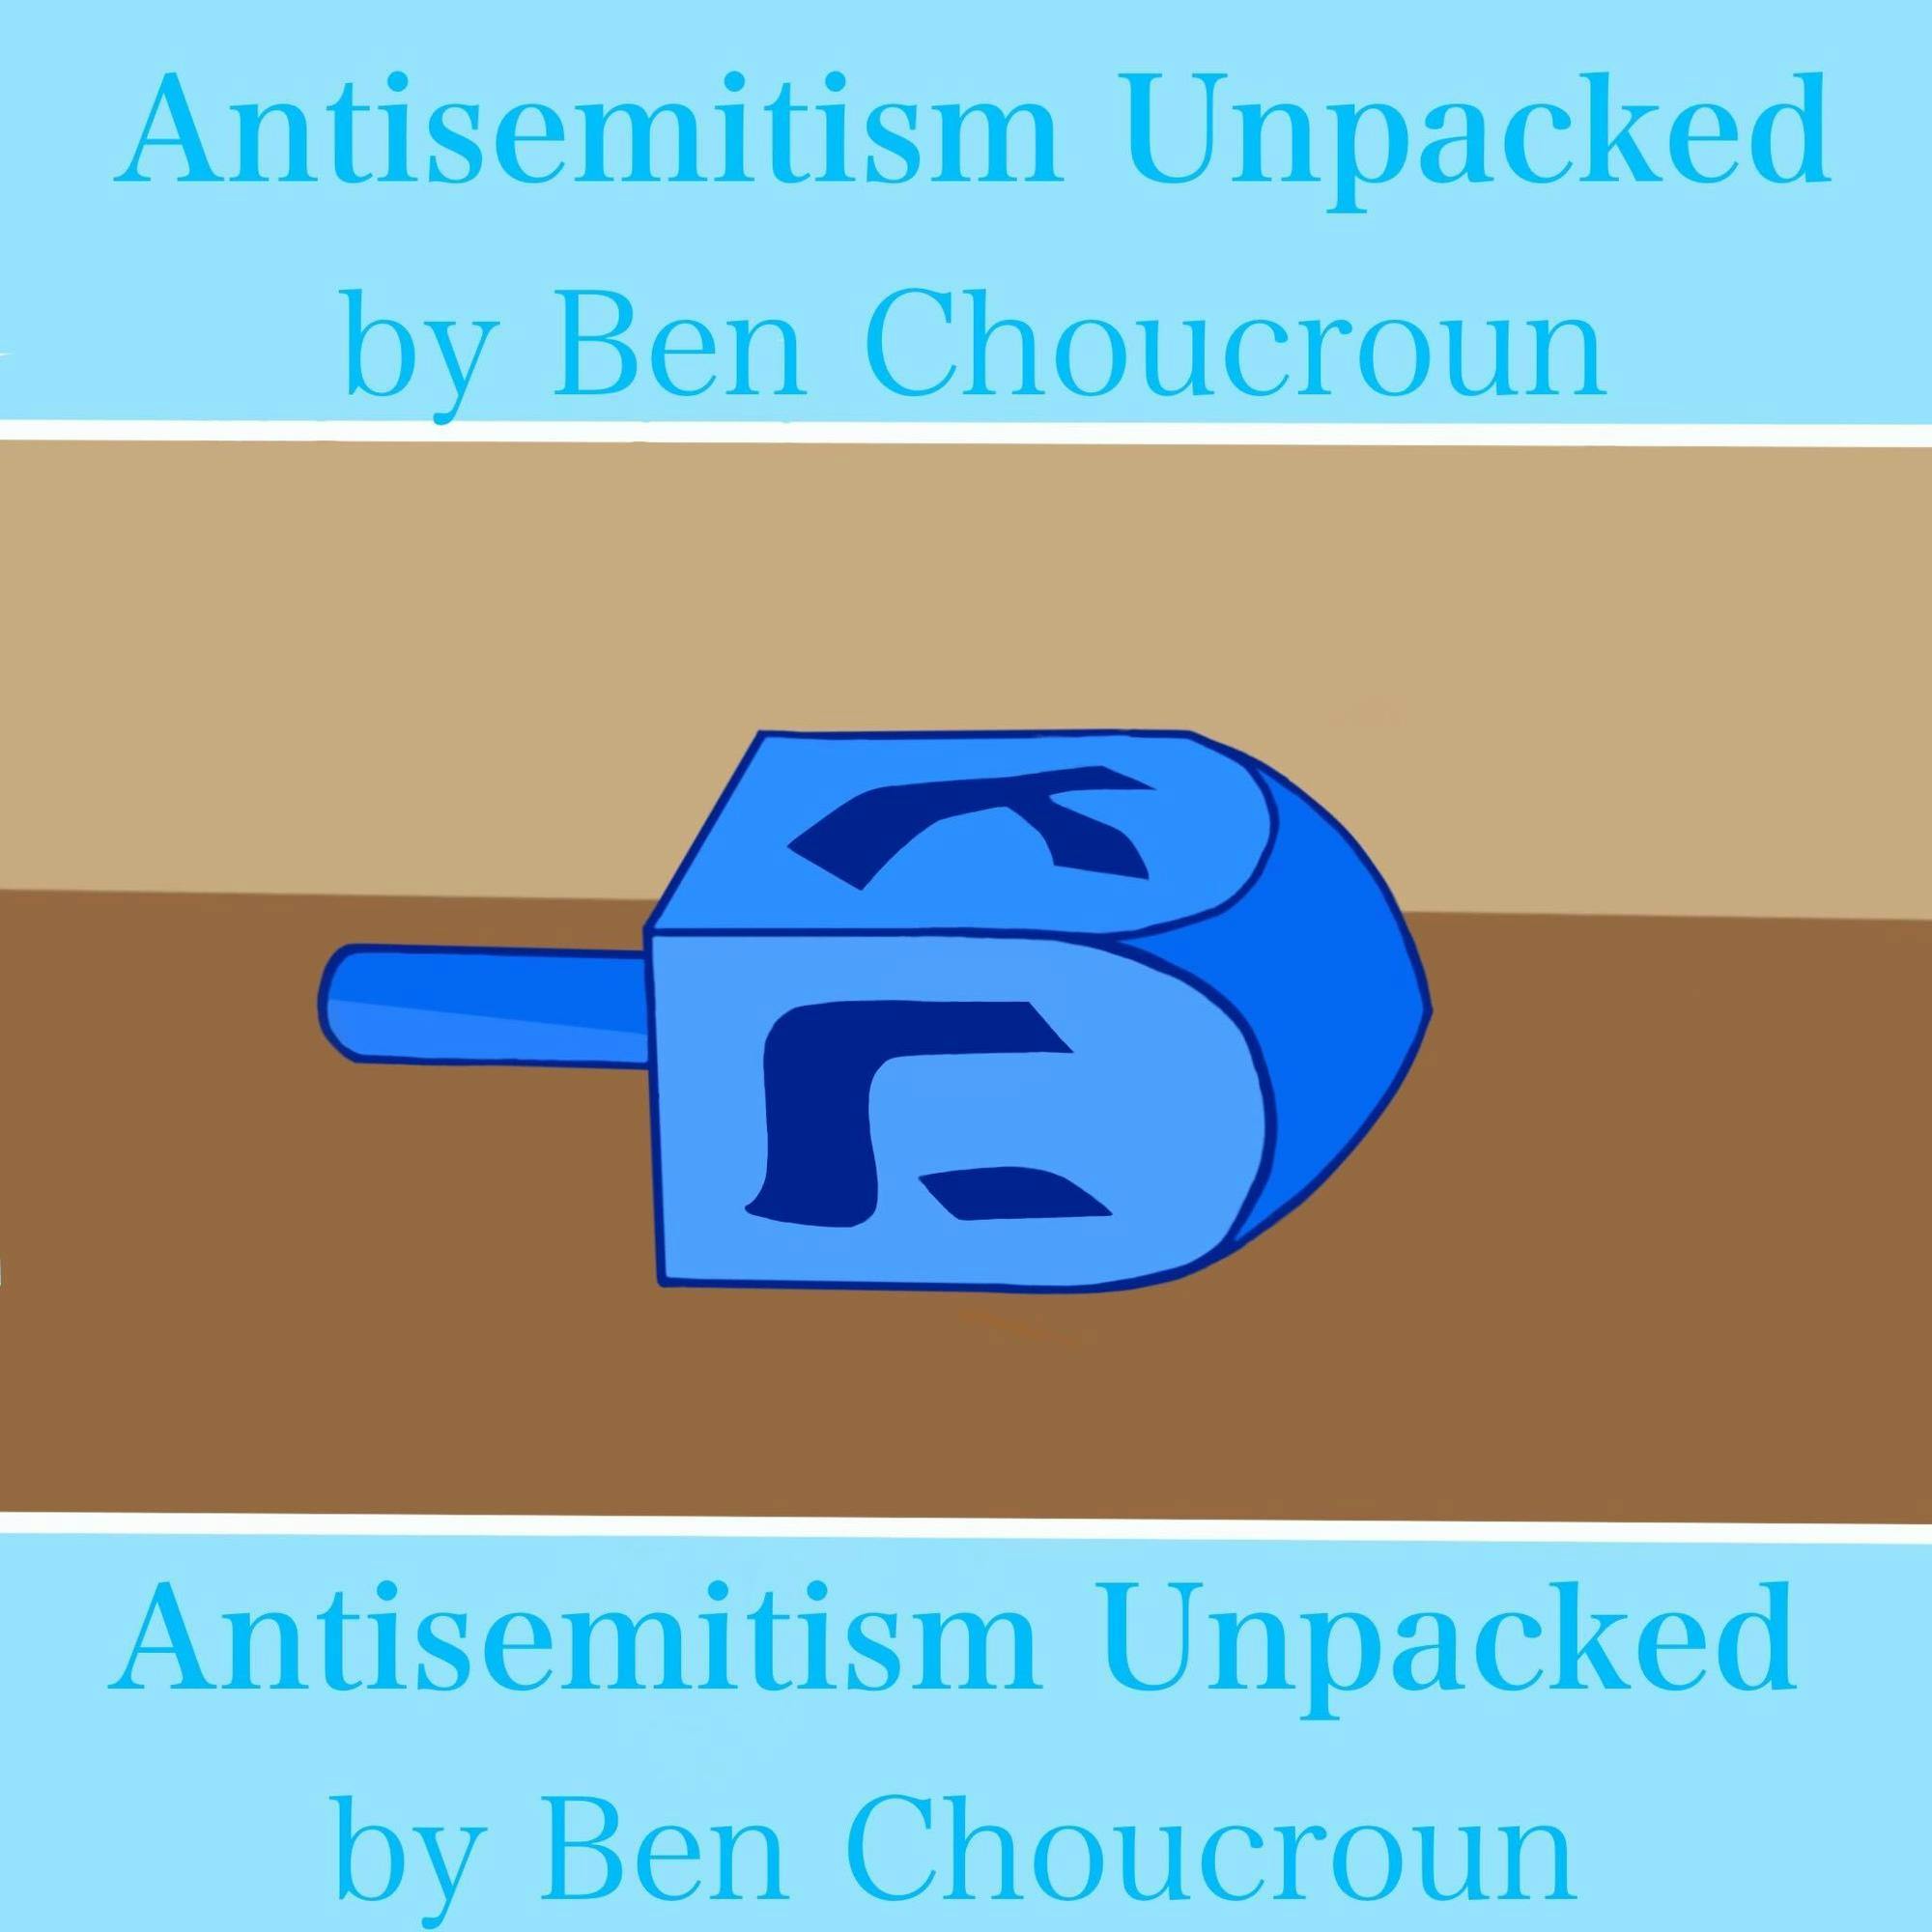 Replacement graphic for Ben Choucroun's column "Antisemitism Unpacked by Ben Choucroun"